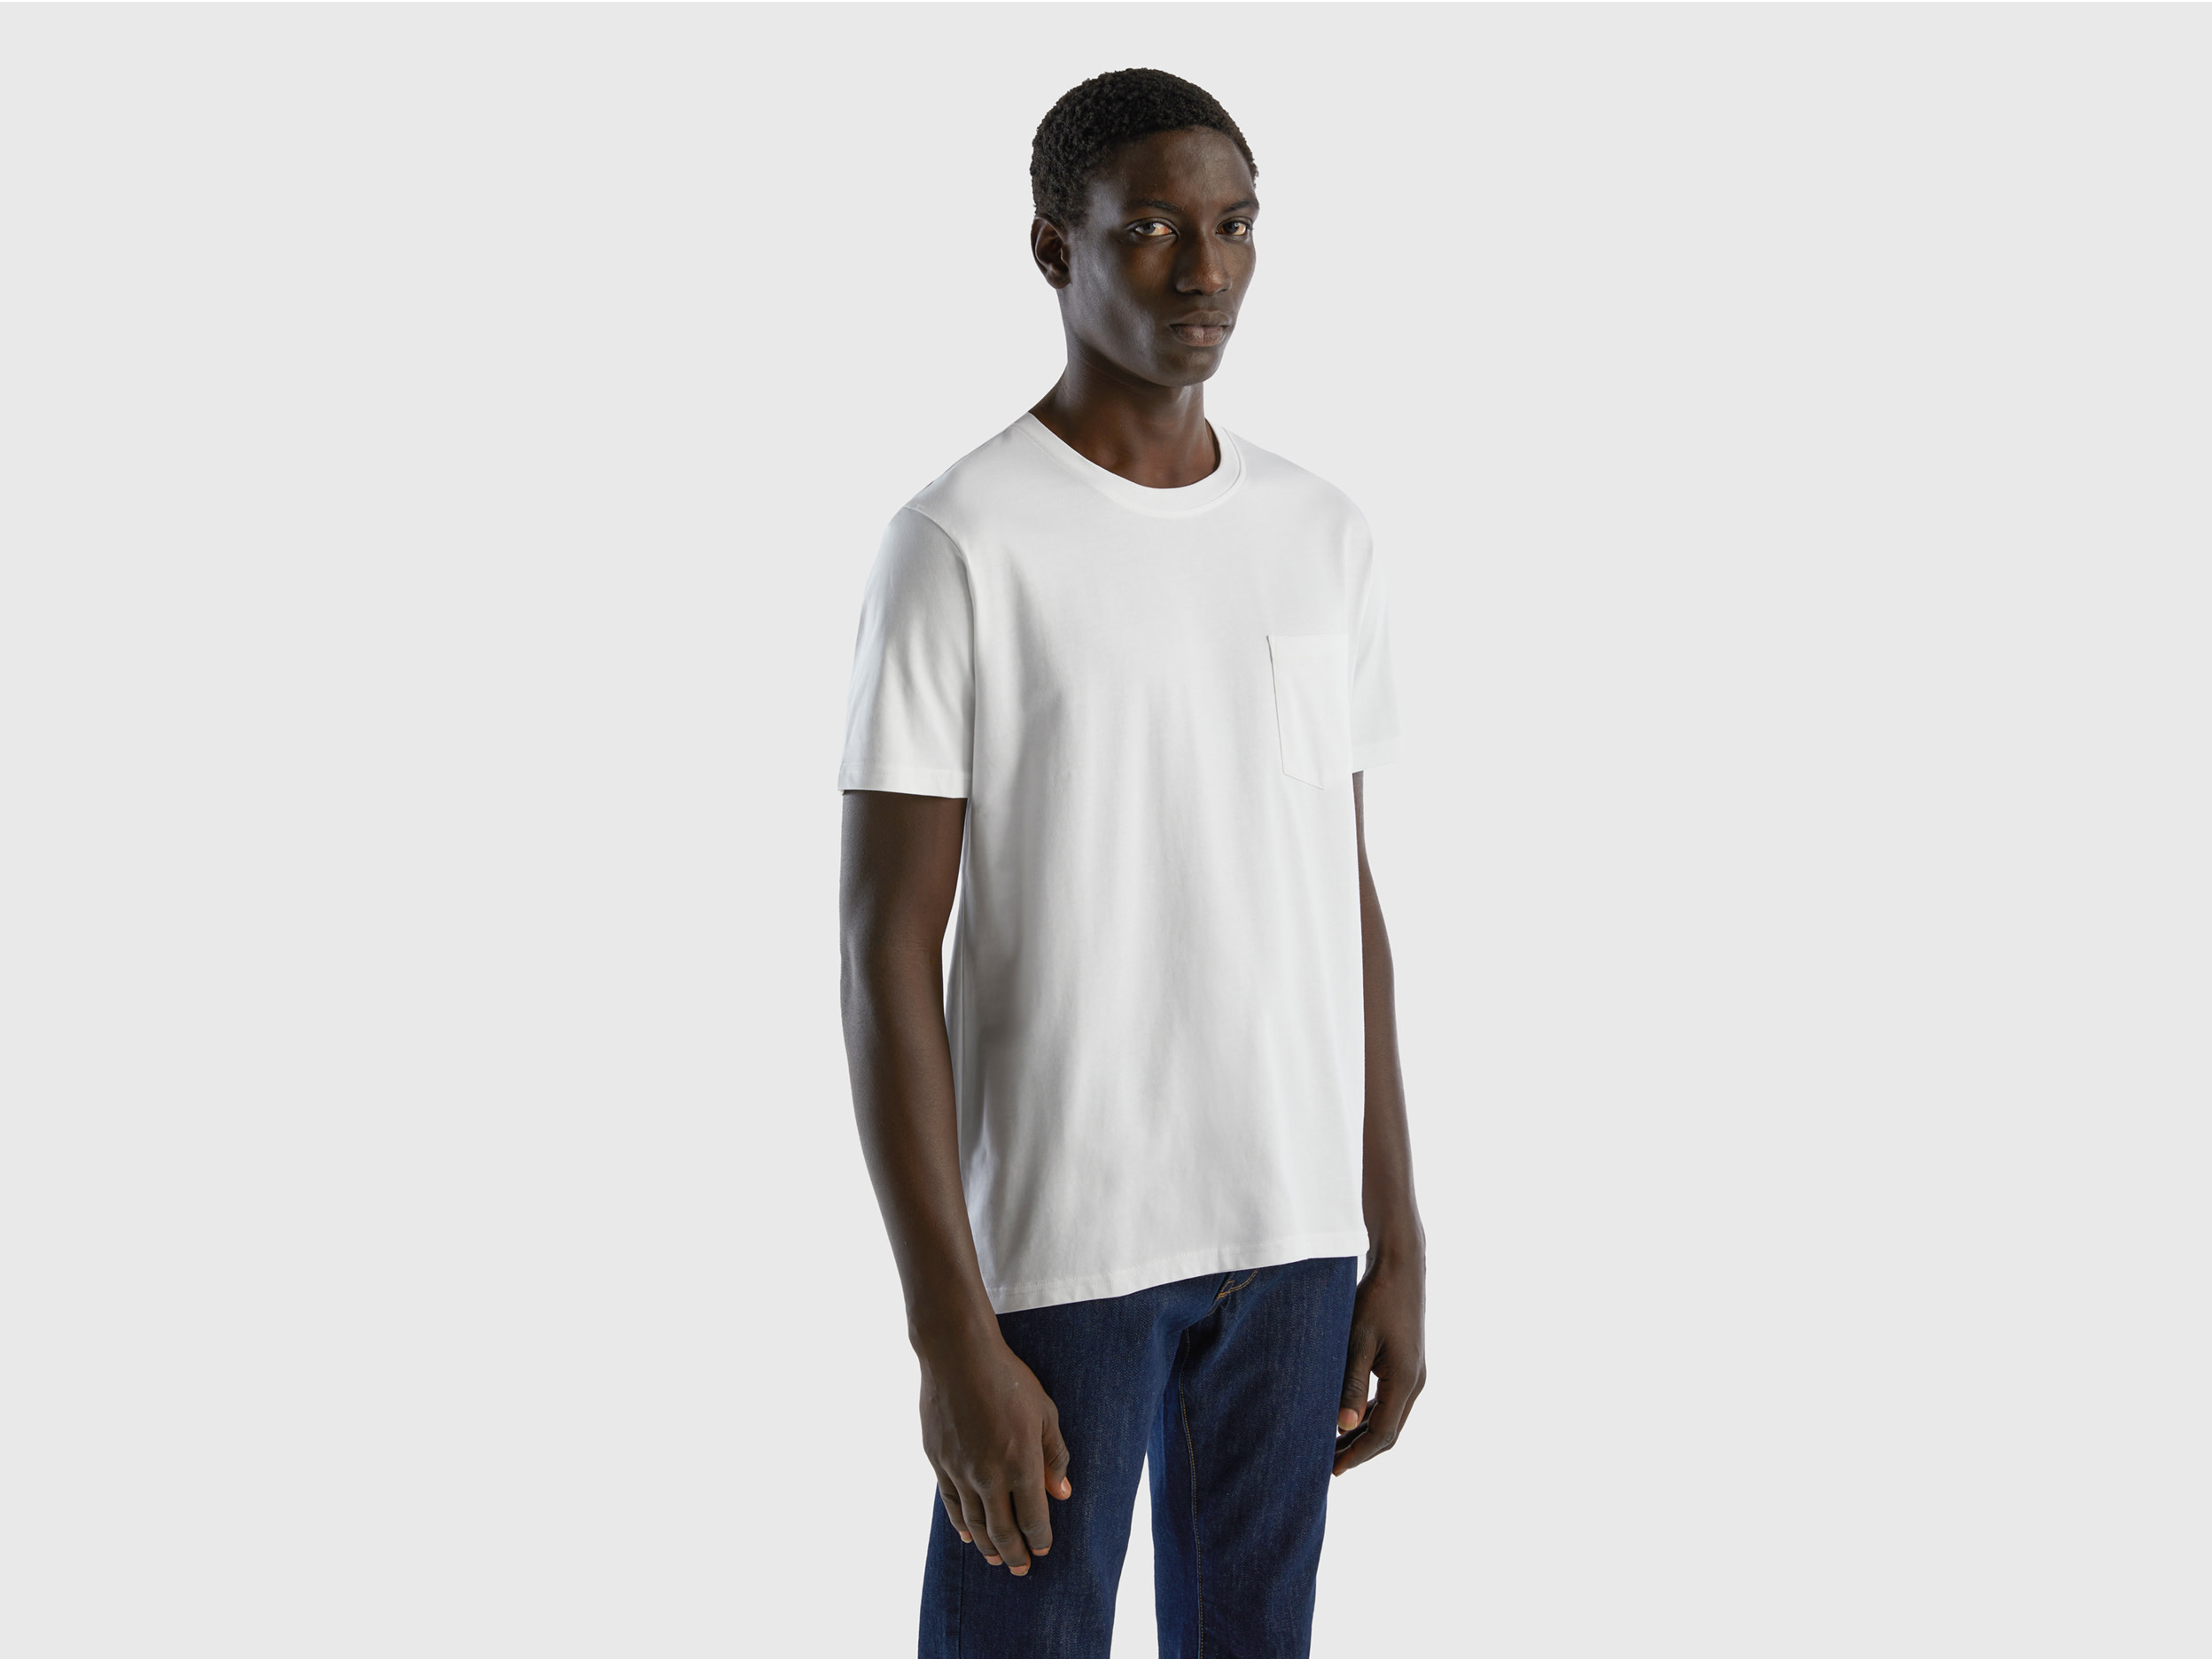 Benetton, 100% Cotton T-shirt With Pocket, size L, White, Men